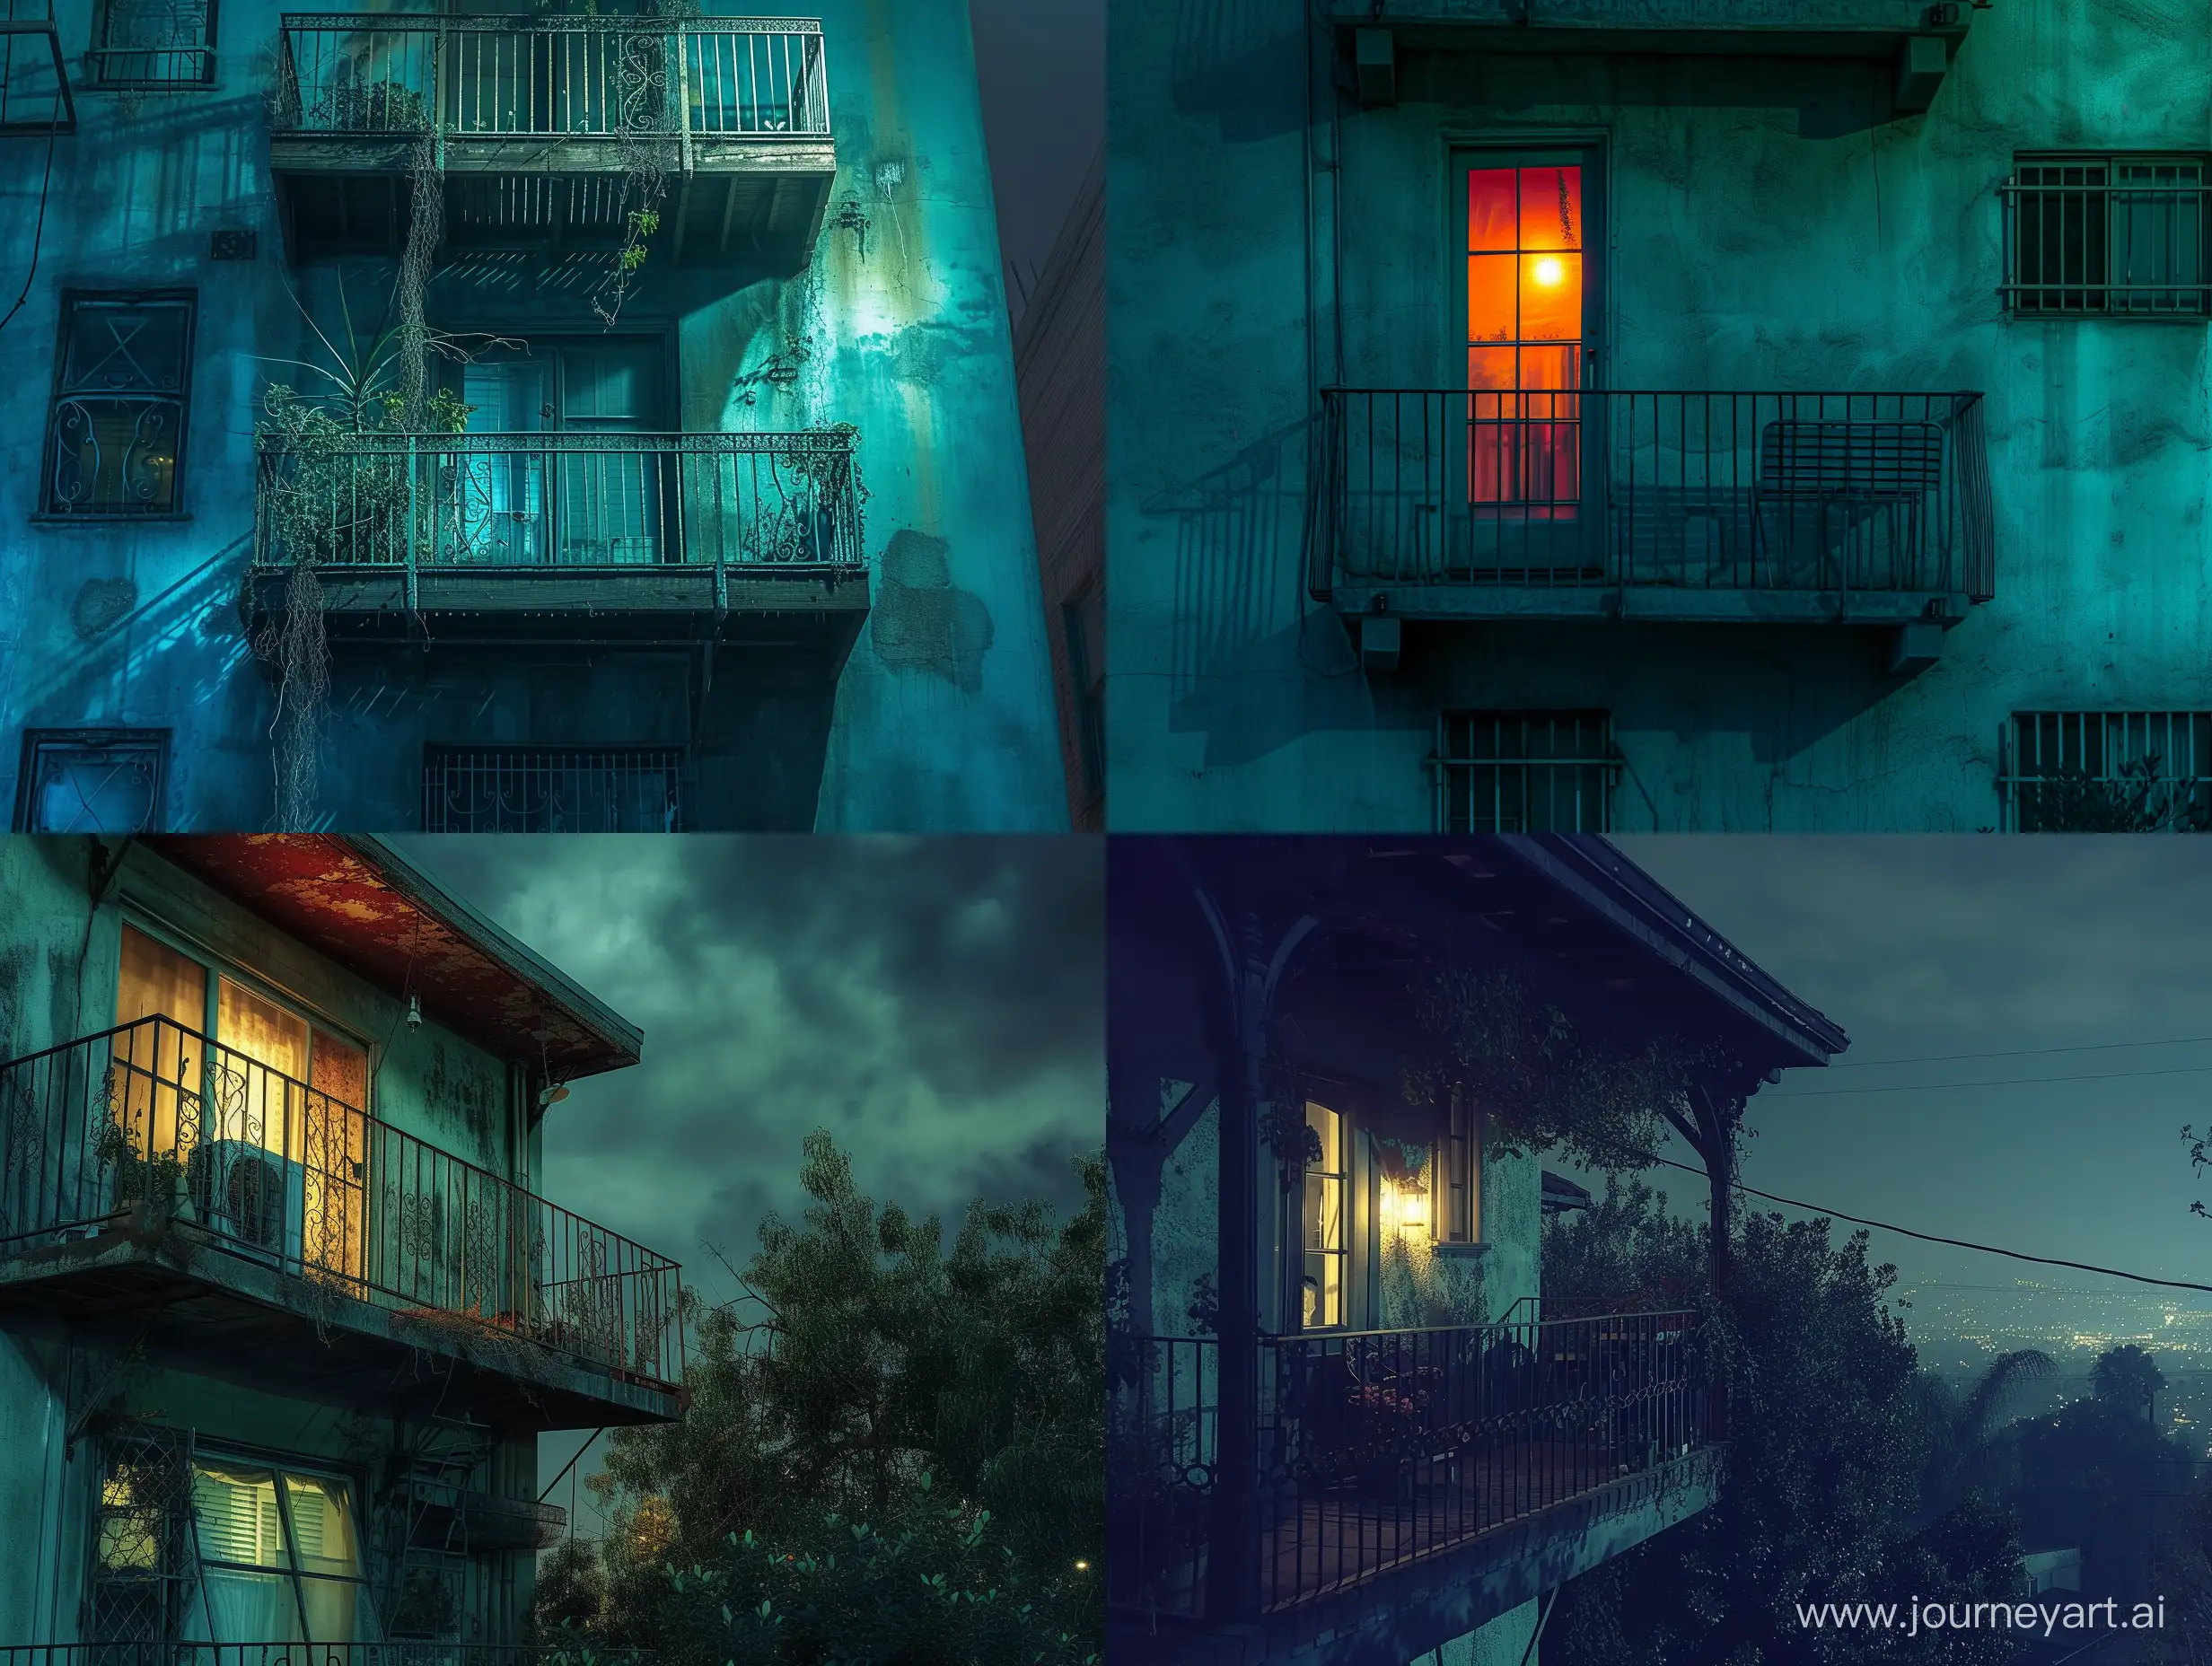 los angeles, vivid , detailed. balcony scene ,moody, nighttime, "Environment, photograph,
